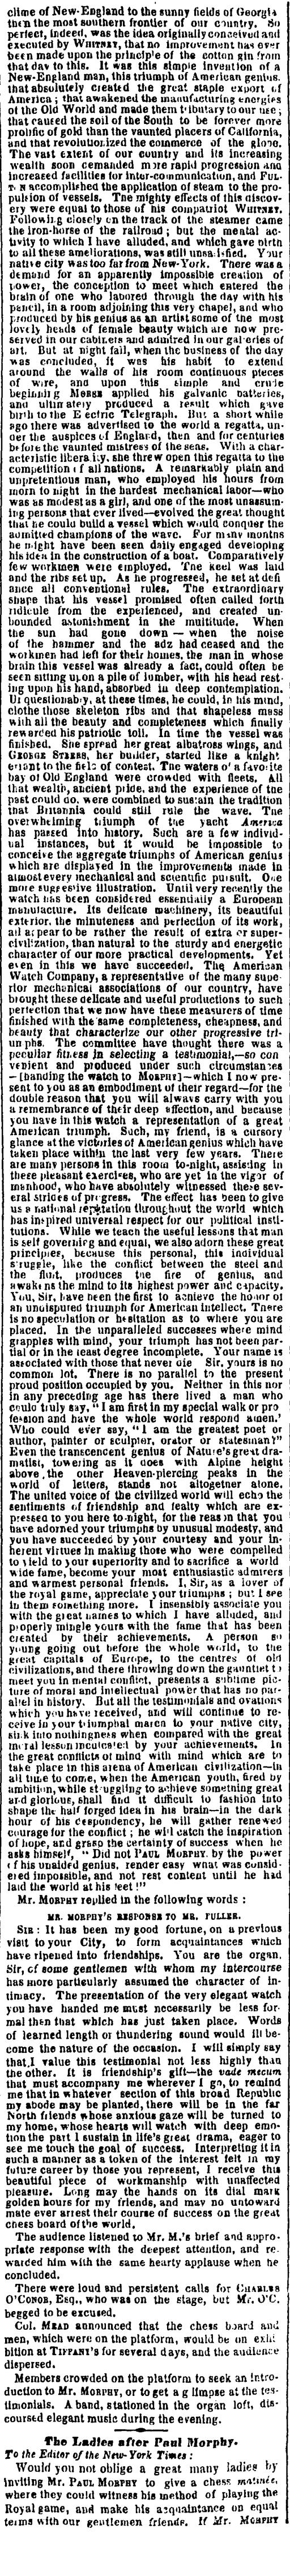 1859.05.26-05 New York Times.jpg